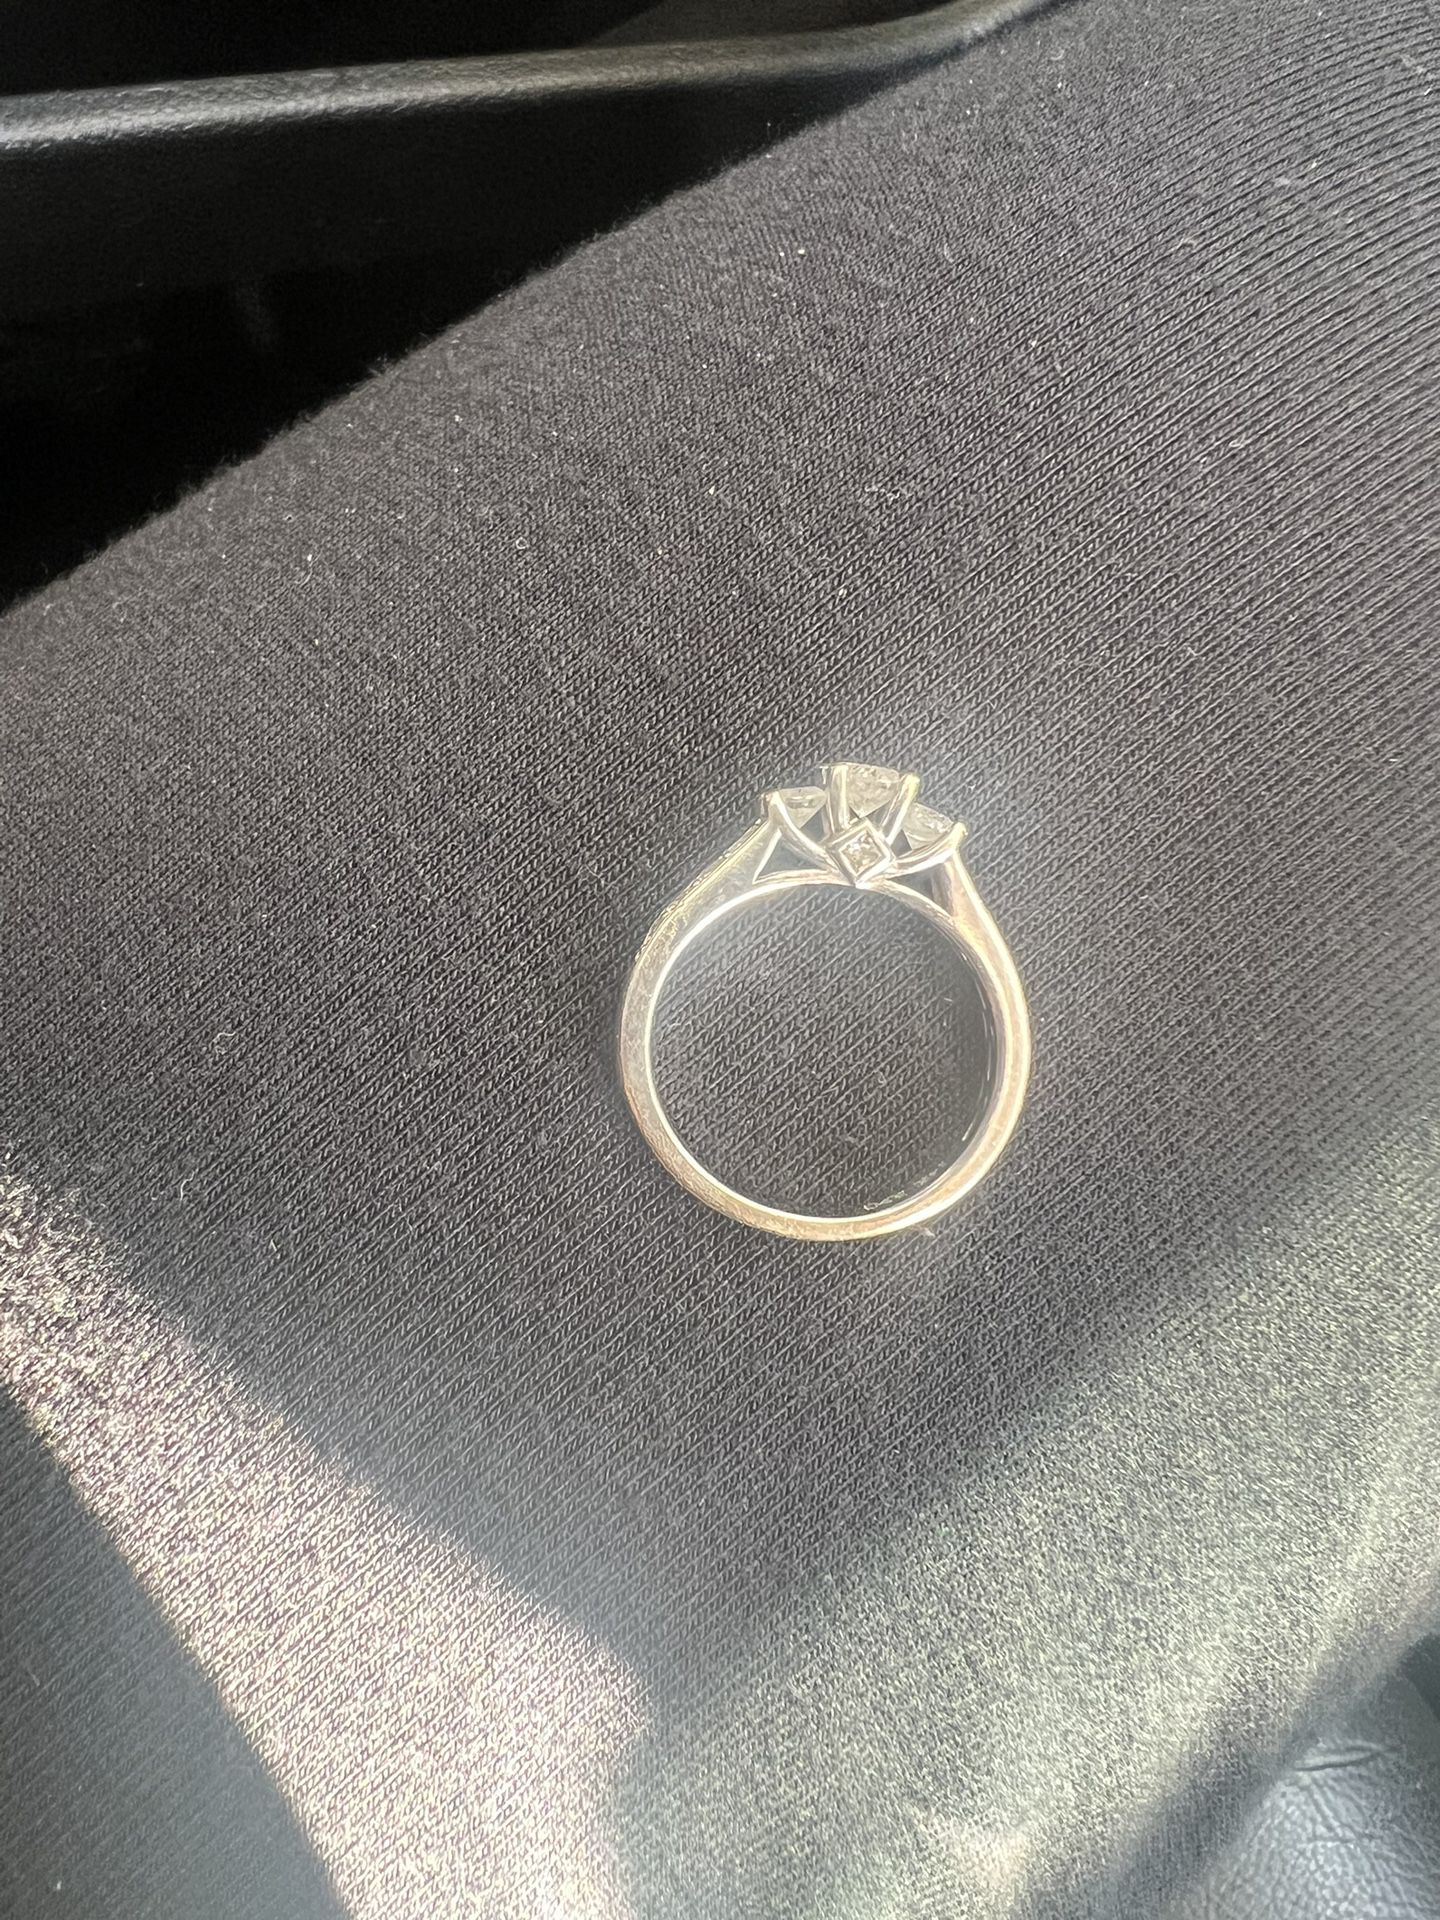 Diamond Three-Stone Engagement Ring (1 ct. t.w.) in 14k White Gold